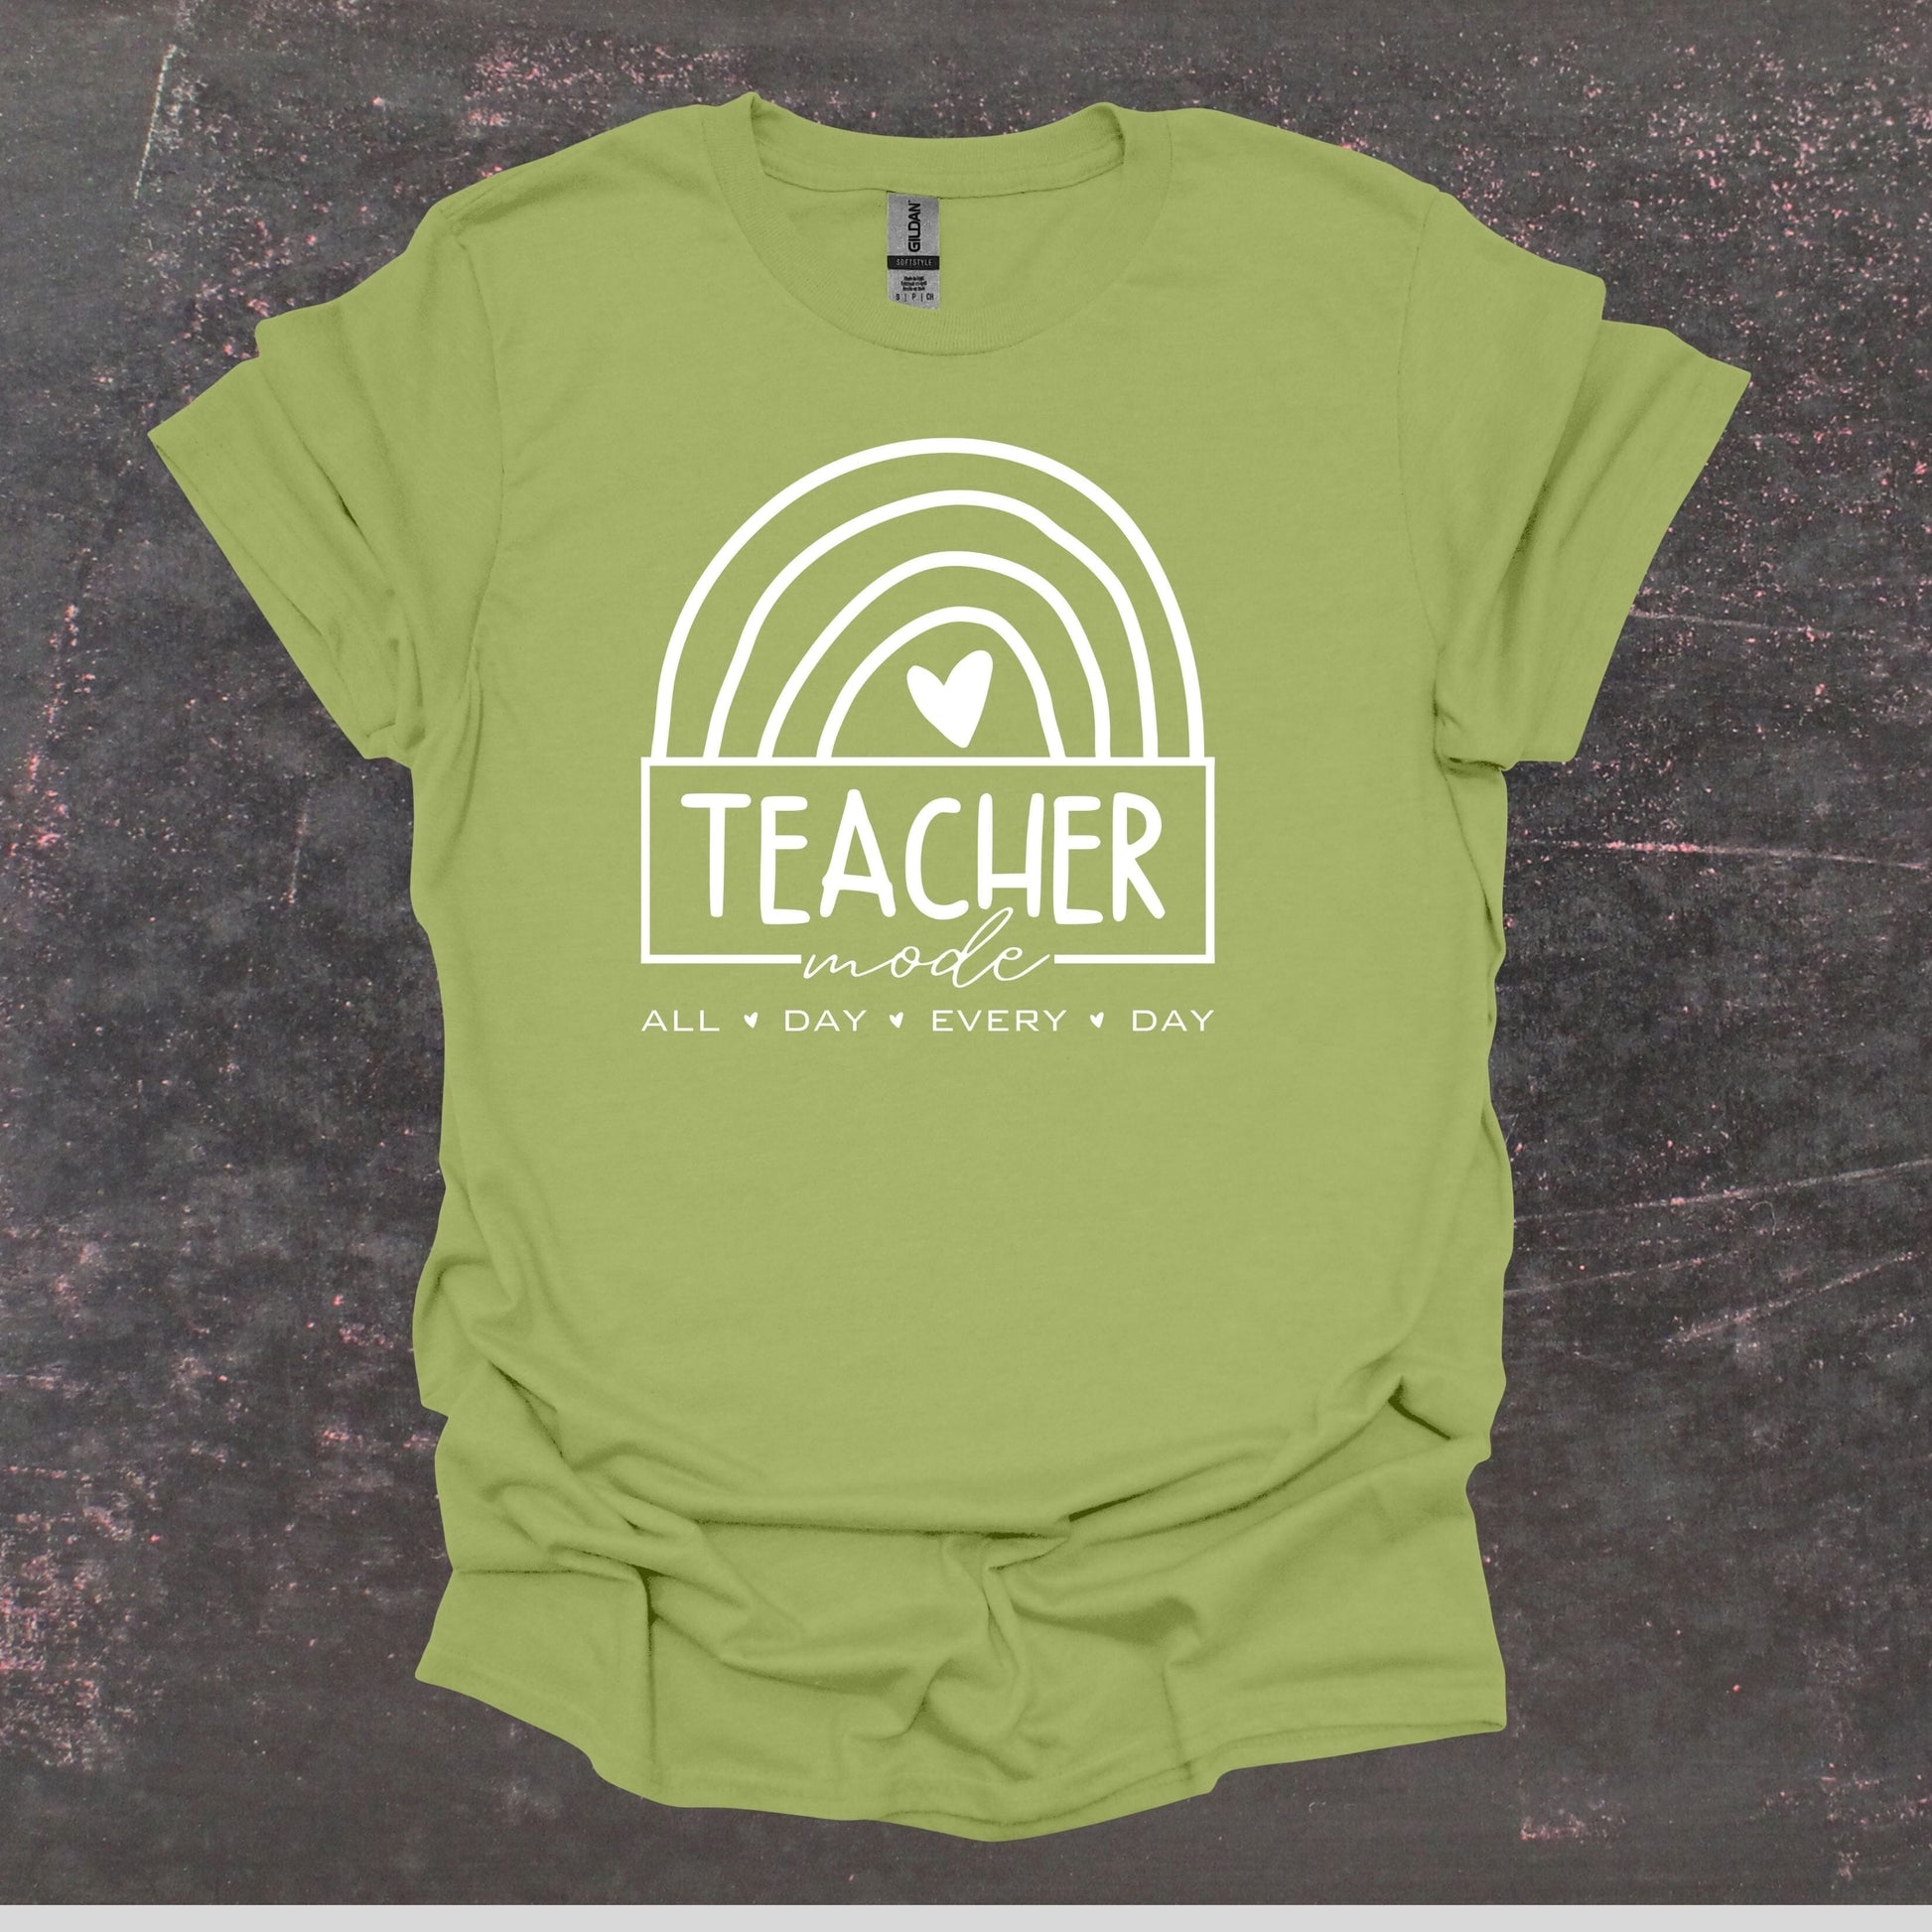 Teacher Mode - Teacher T Shirt - Adult Tee Shirts T-Shirts Graphic Avenue Kiwi Adult Small 